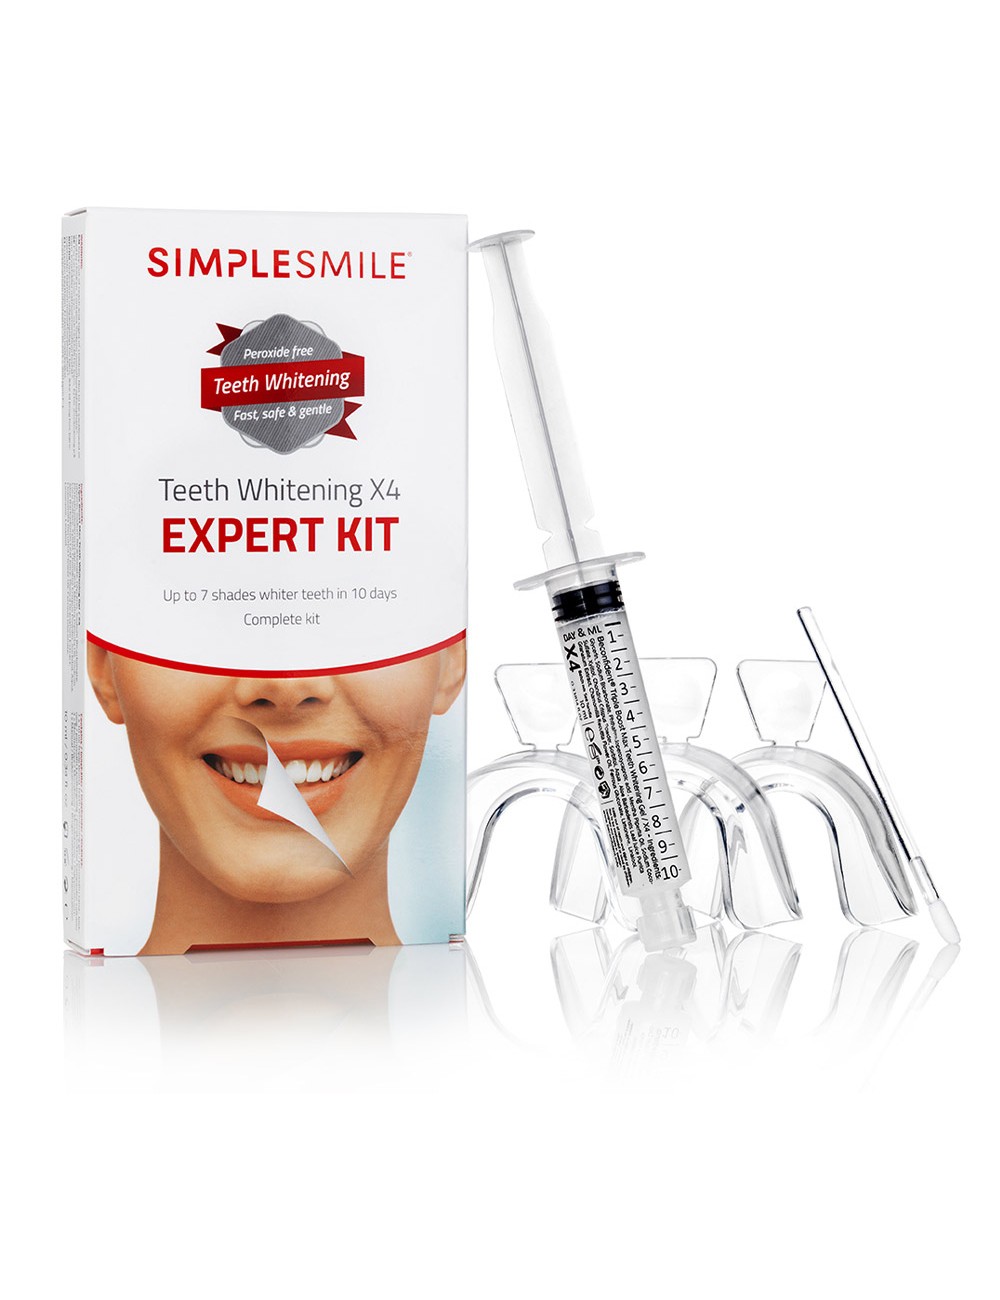 SIMPLESMILE® teeth whitening X4 expert kit